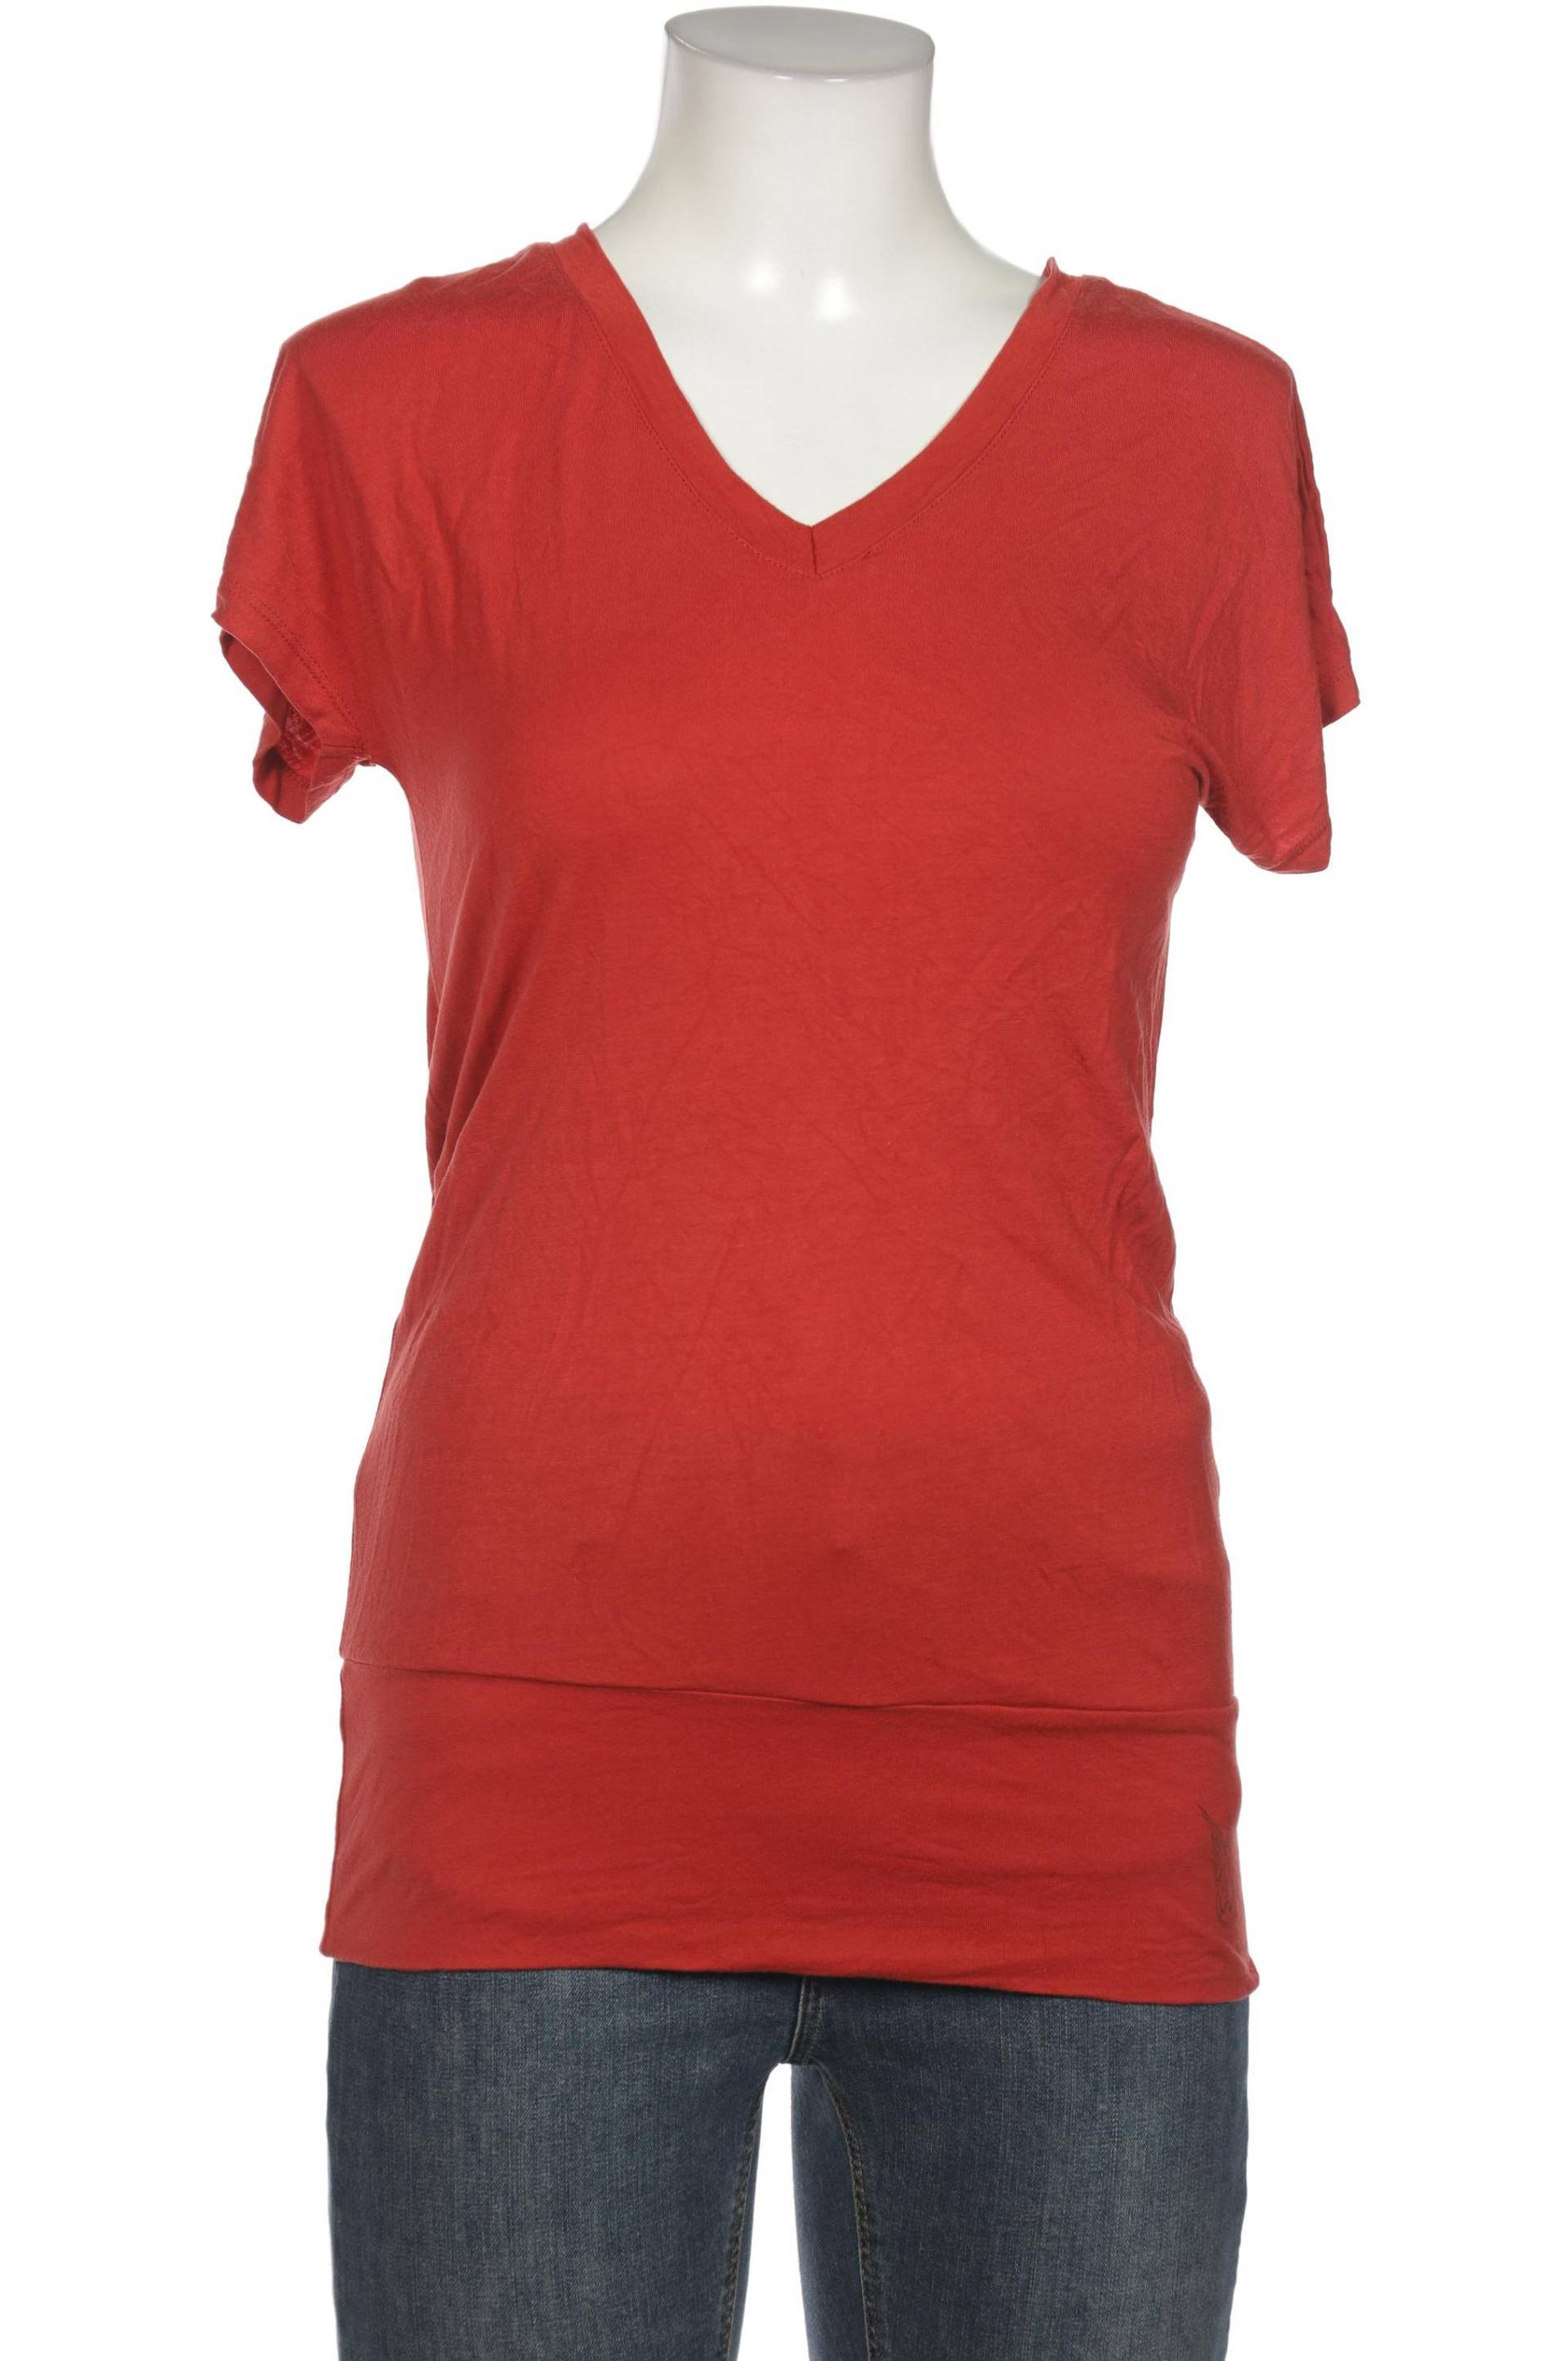 Maui Wowie Damen T-Shirt, rot von maui wowie